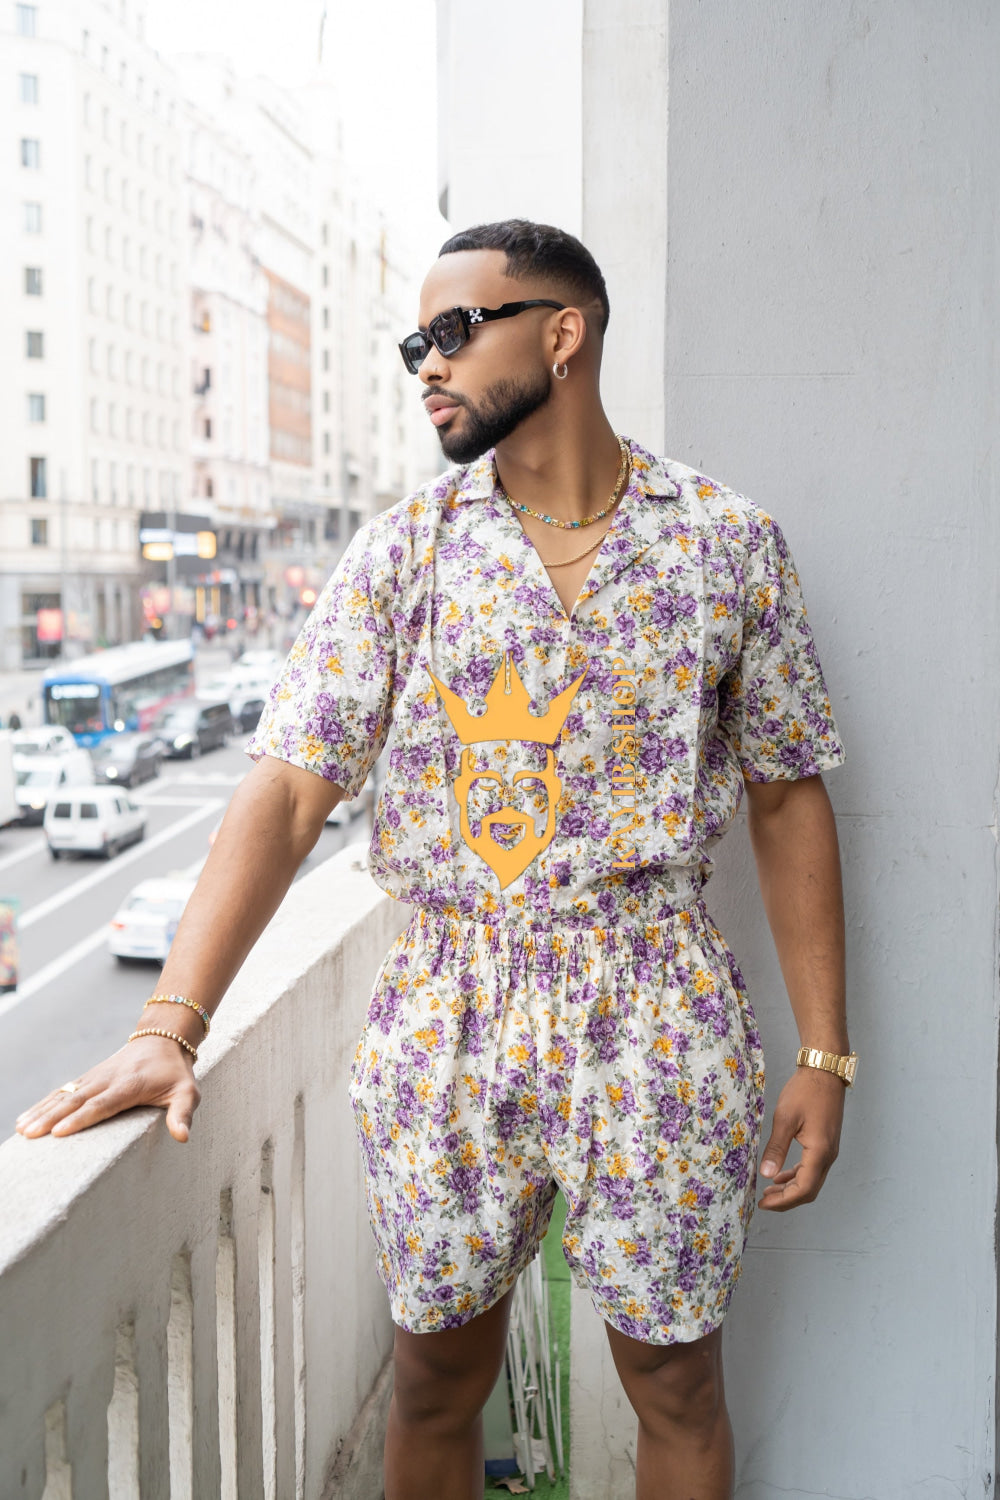 Flowers Spring/Summer Men's Lace Two-Piece Clothing: Sophisticated & Versatile Ensemble